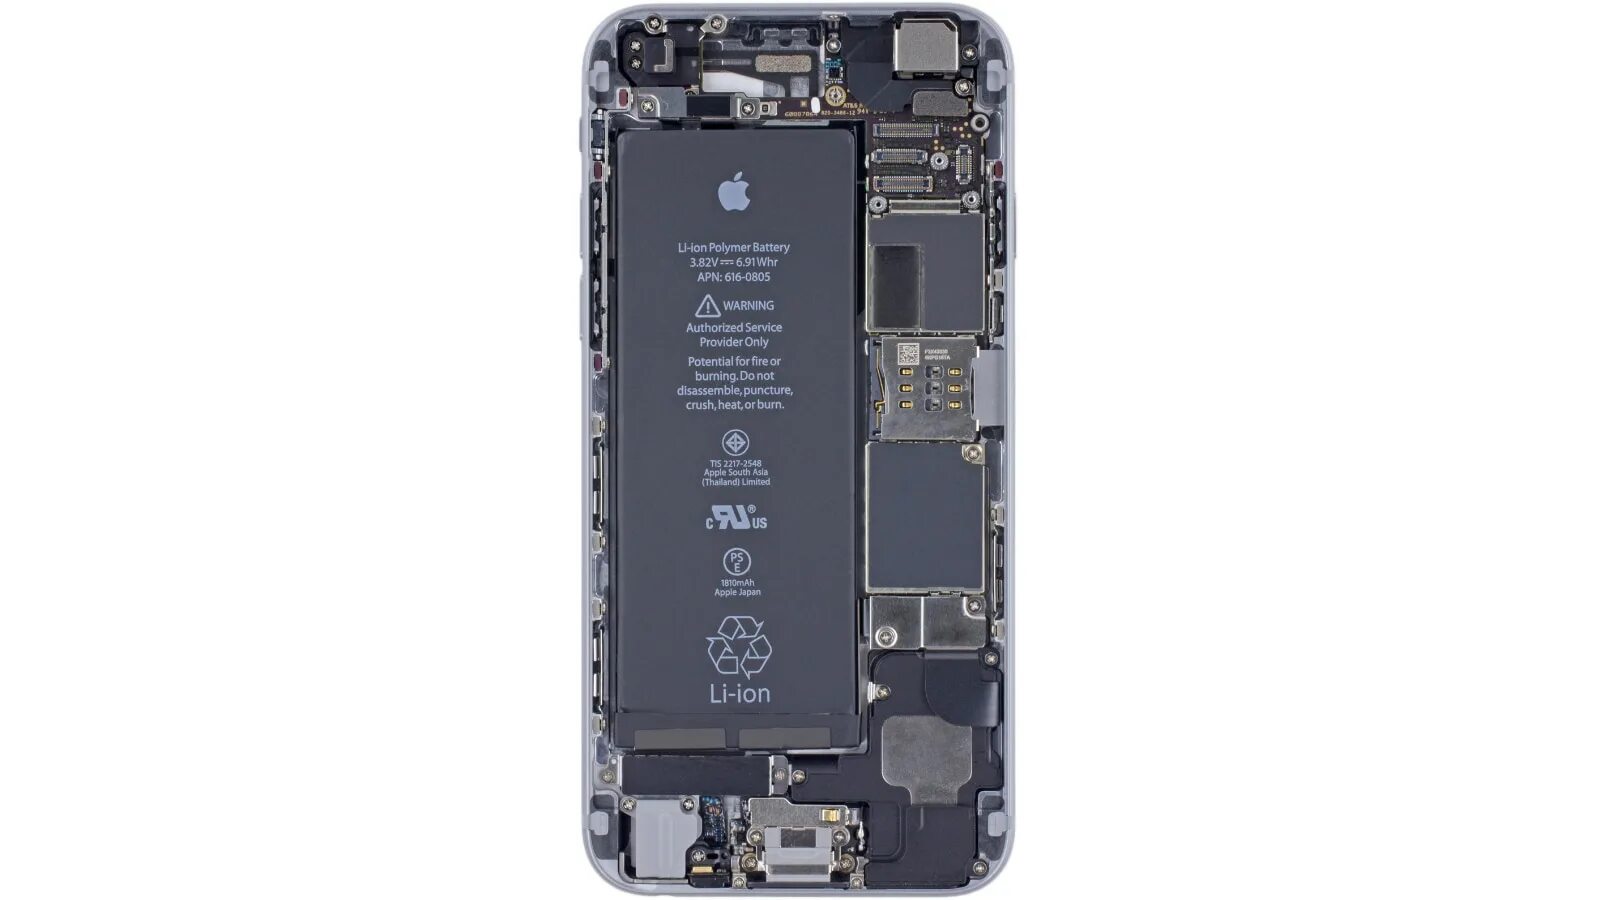 Iphone 6s процессор. 1610a3 iphone 6s. Процессор айфон 6 плюс. Внутренности айфон 6s.